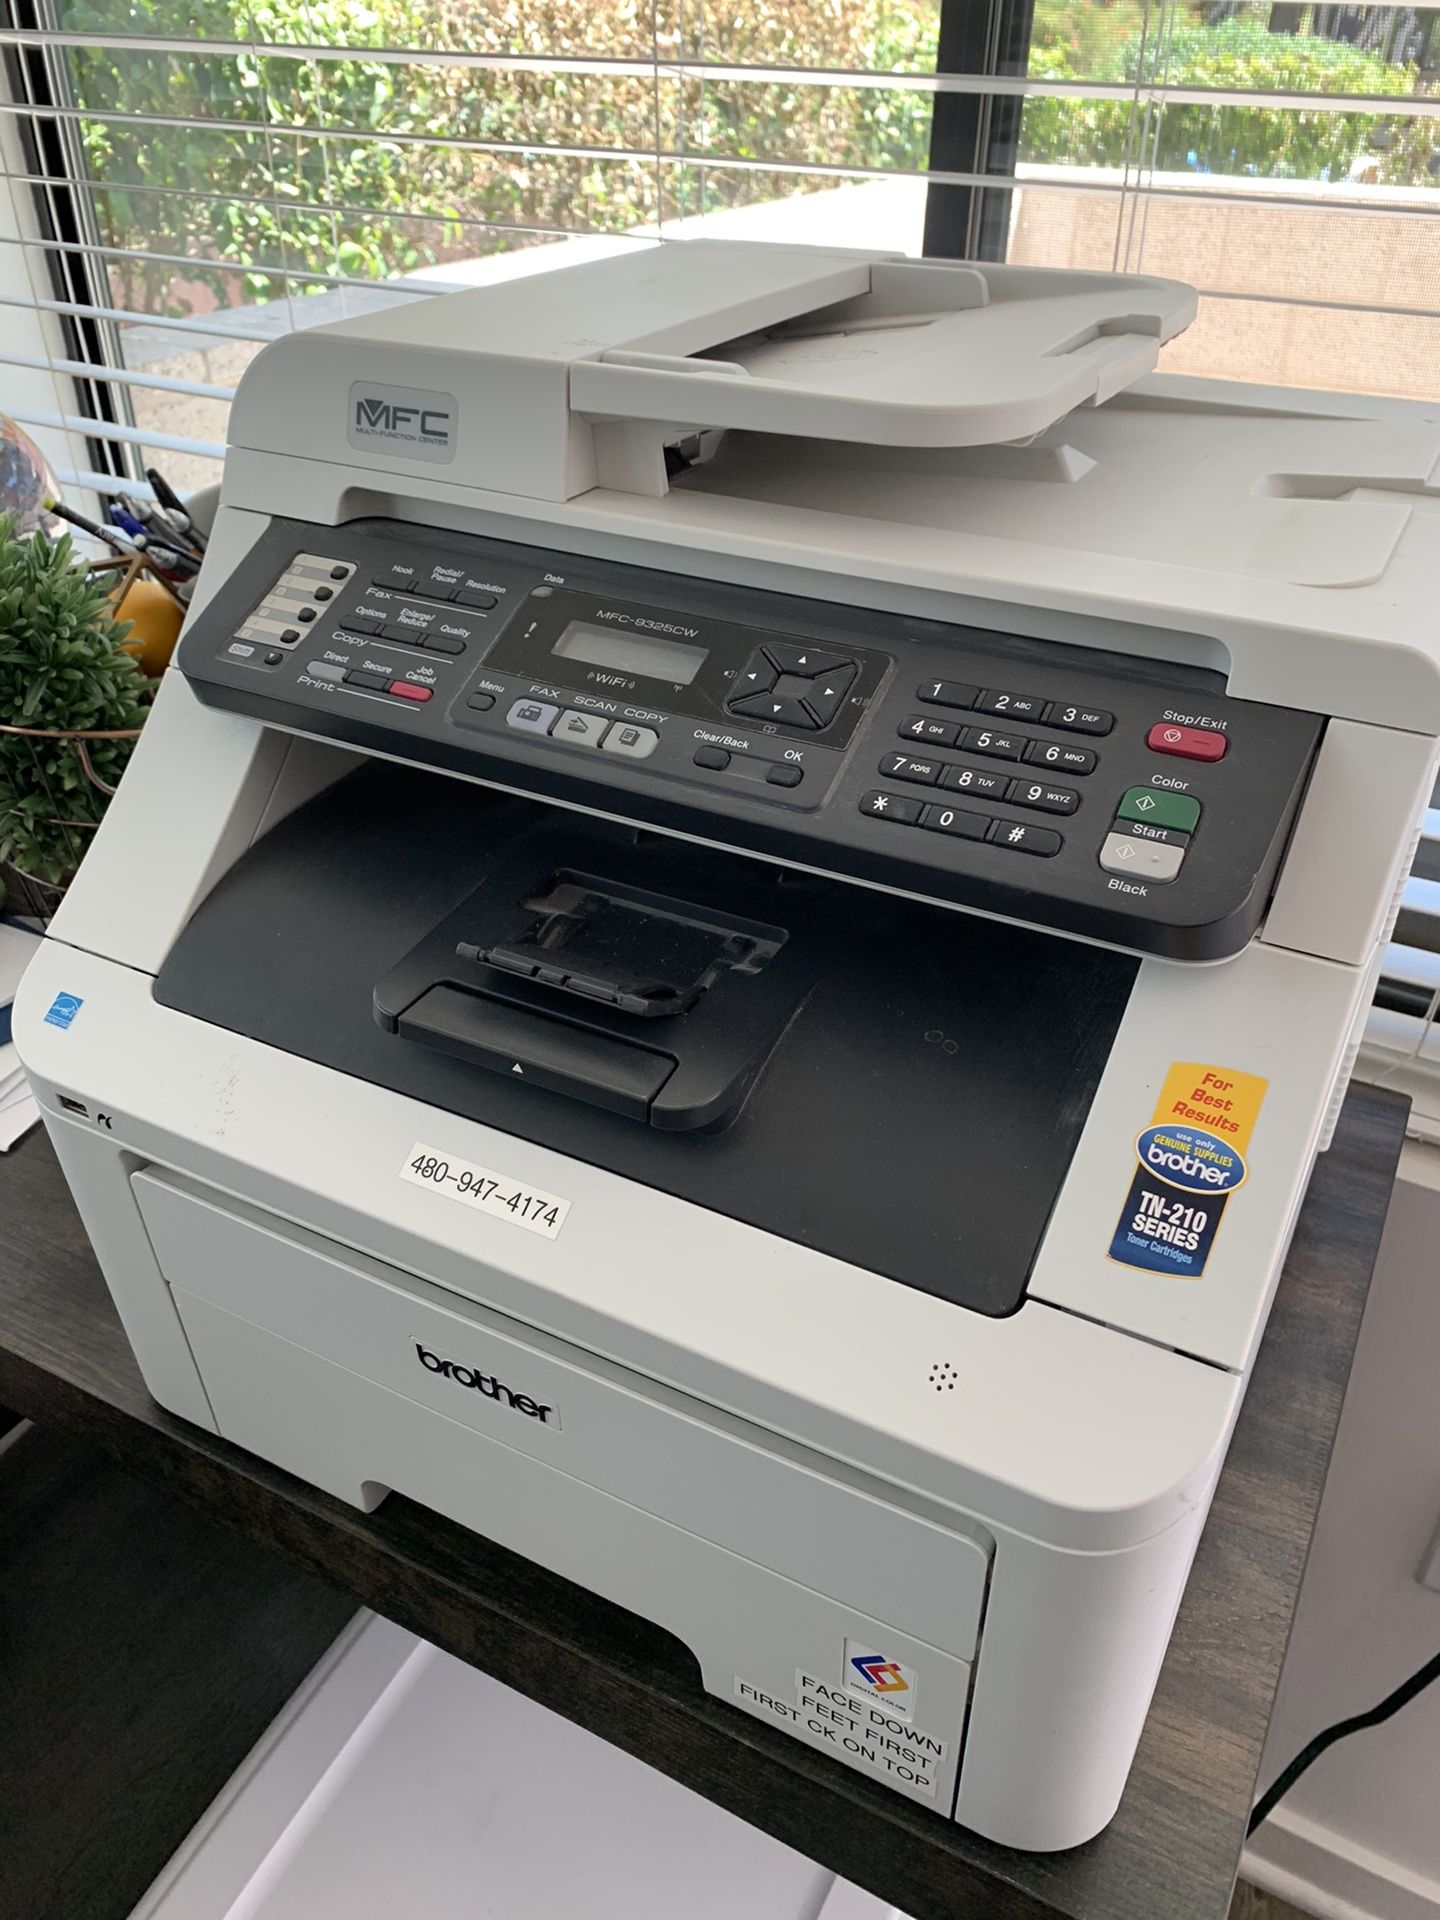 Print / scanner / fax / copy